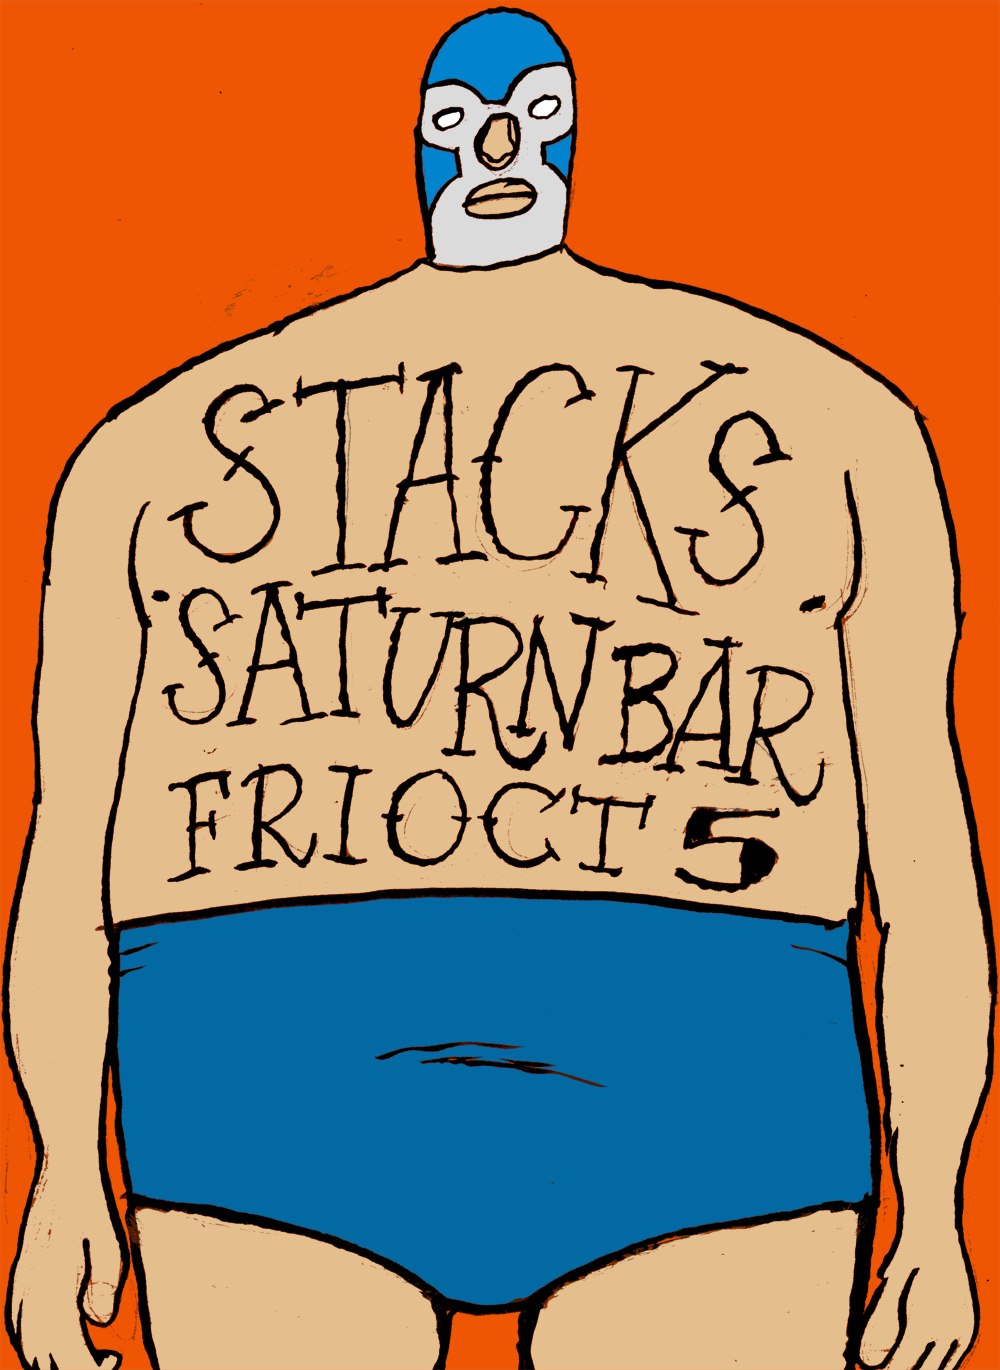 Stacks played the Saturn Bar October 5.